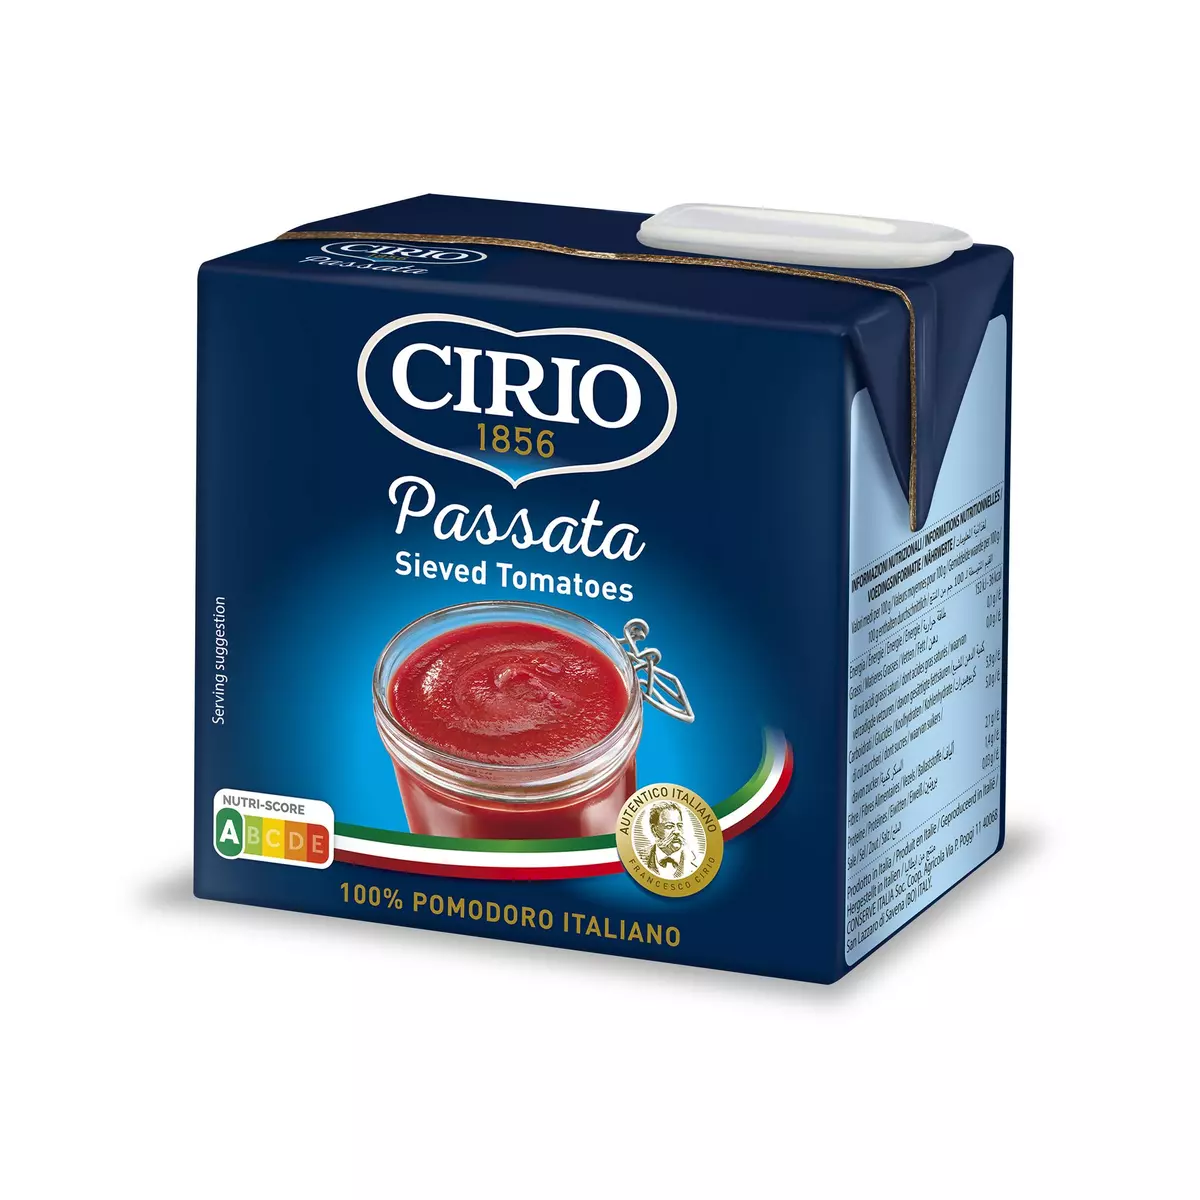 CIRIO Passata purée de tomates en brique refermable 500g